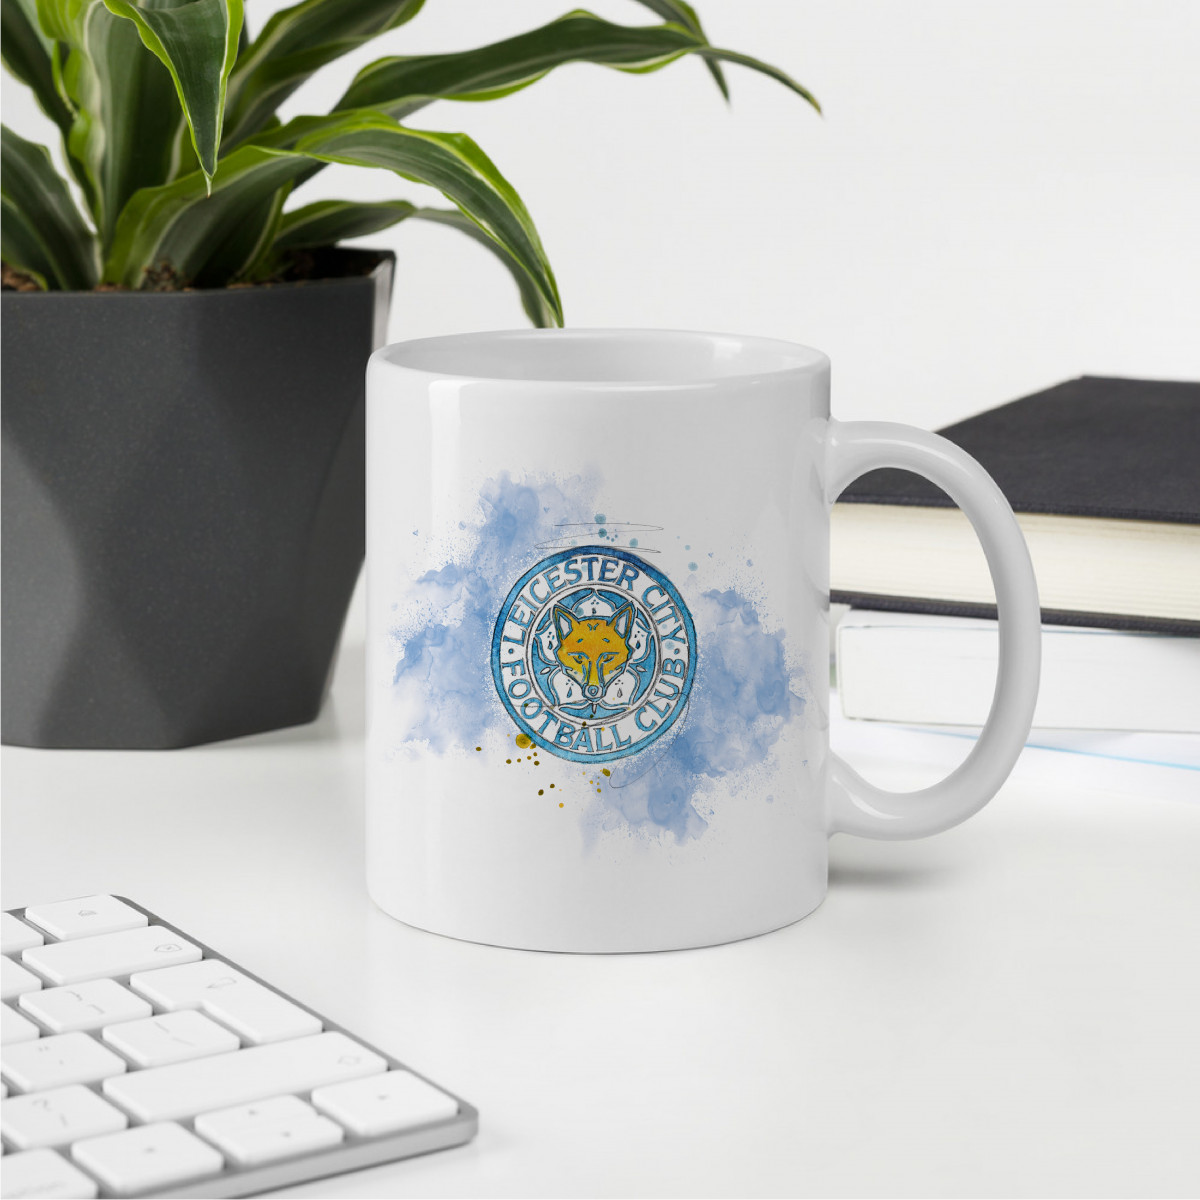 Leicester City - Retro Subbuteo, personalised Mug